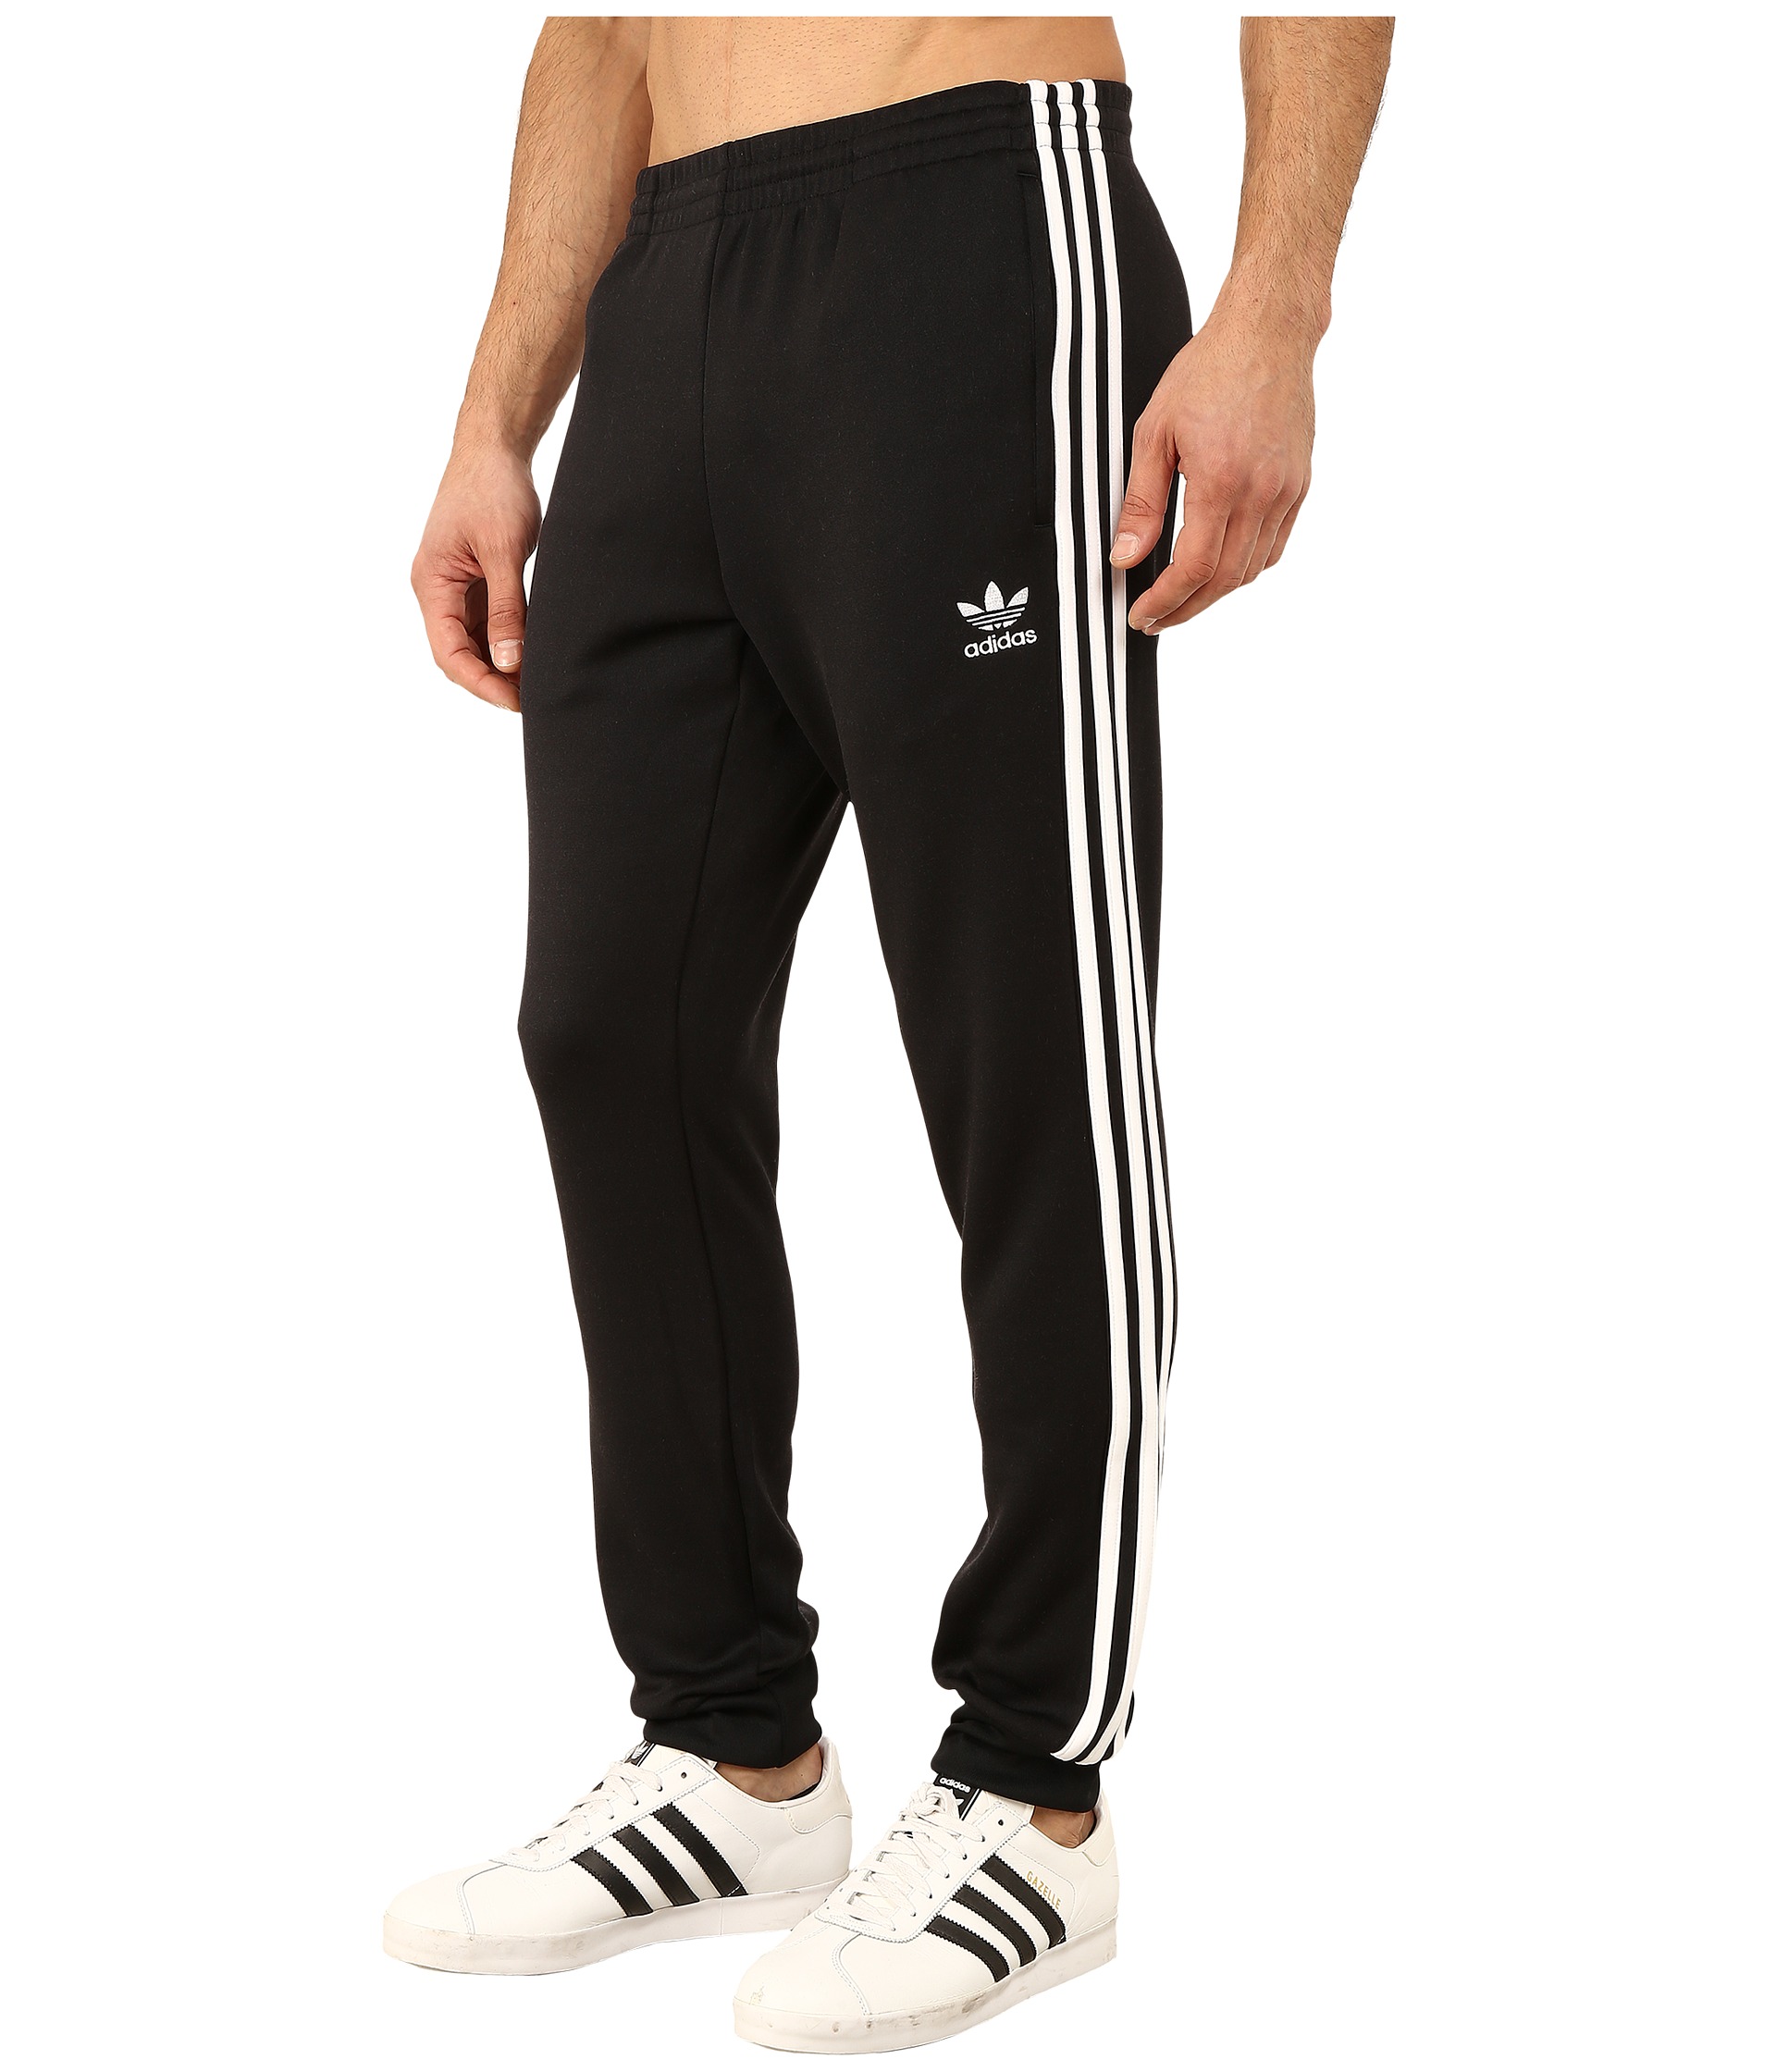 Adidas Originals Superstar Cuffed Track Pants, Clothing, Adidas